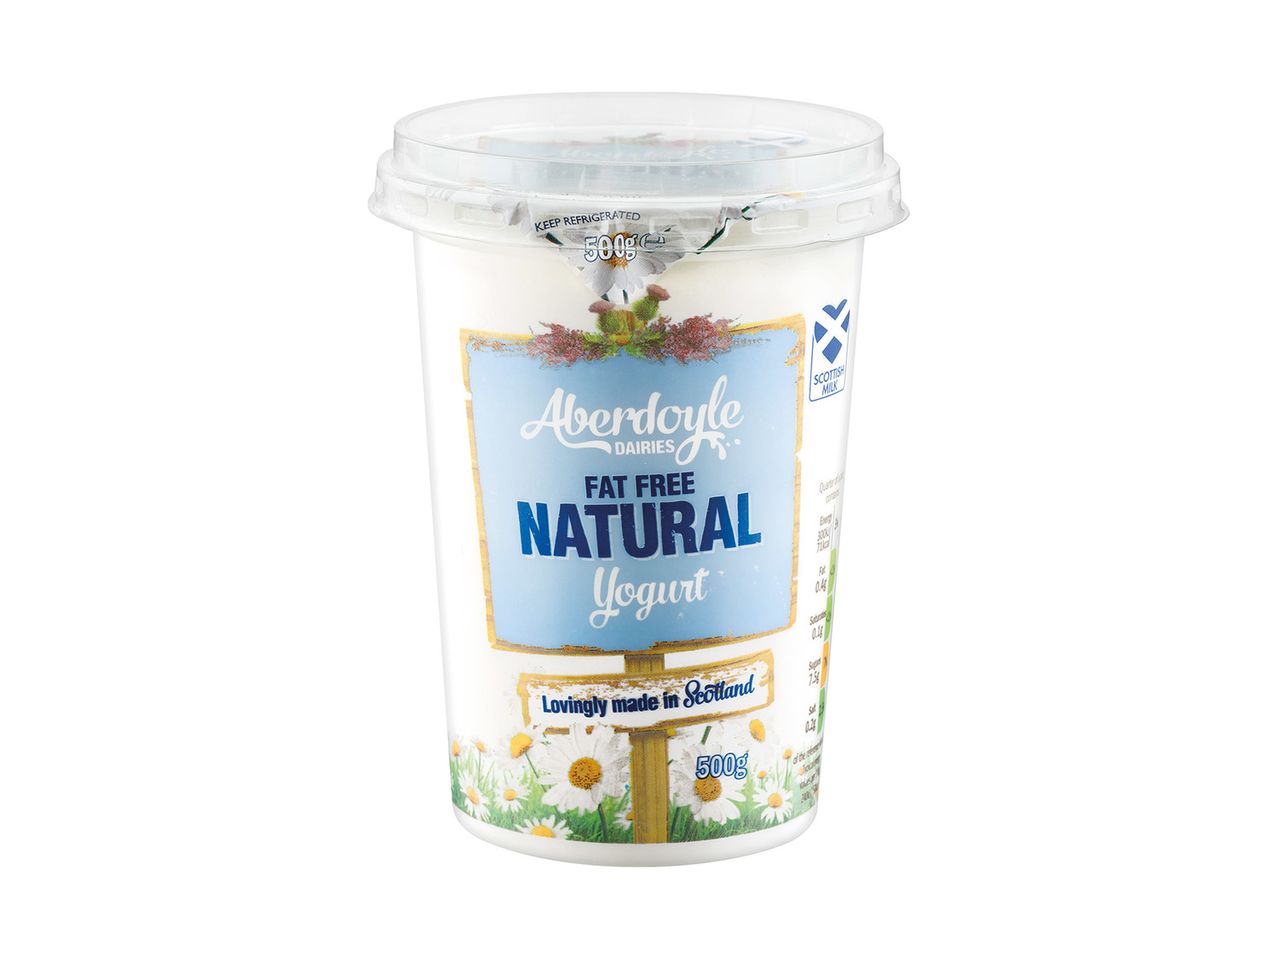 Go to full screen view: Aberdoyle Dairies Fat Free Natural Yoghurt - Image 1